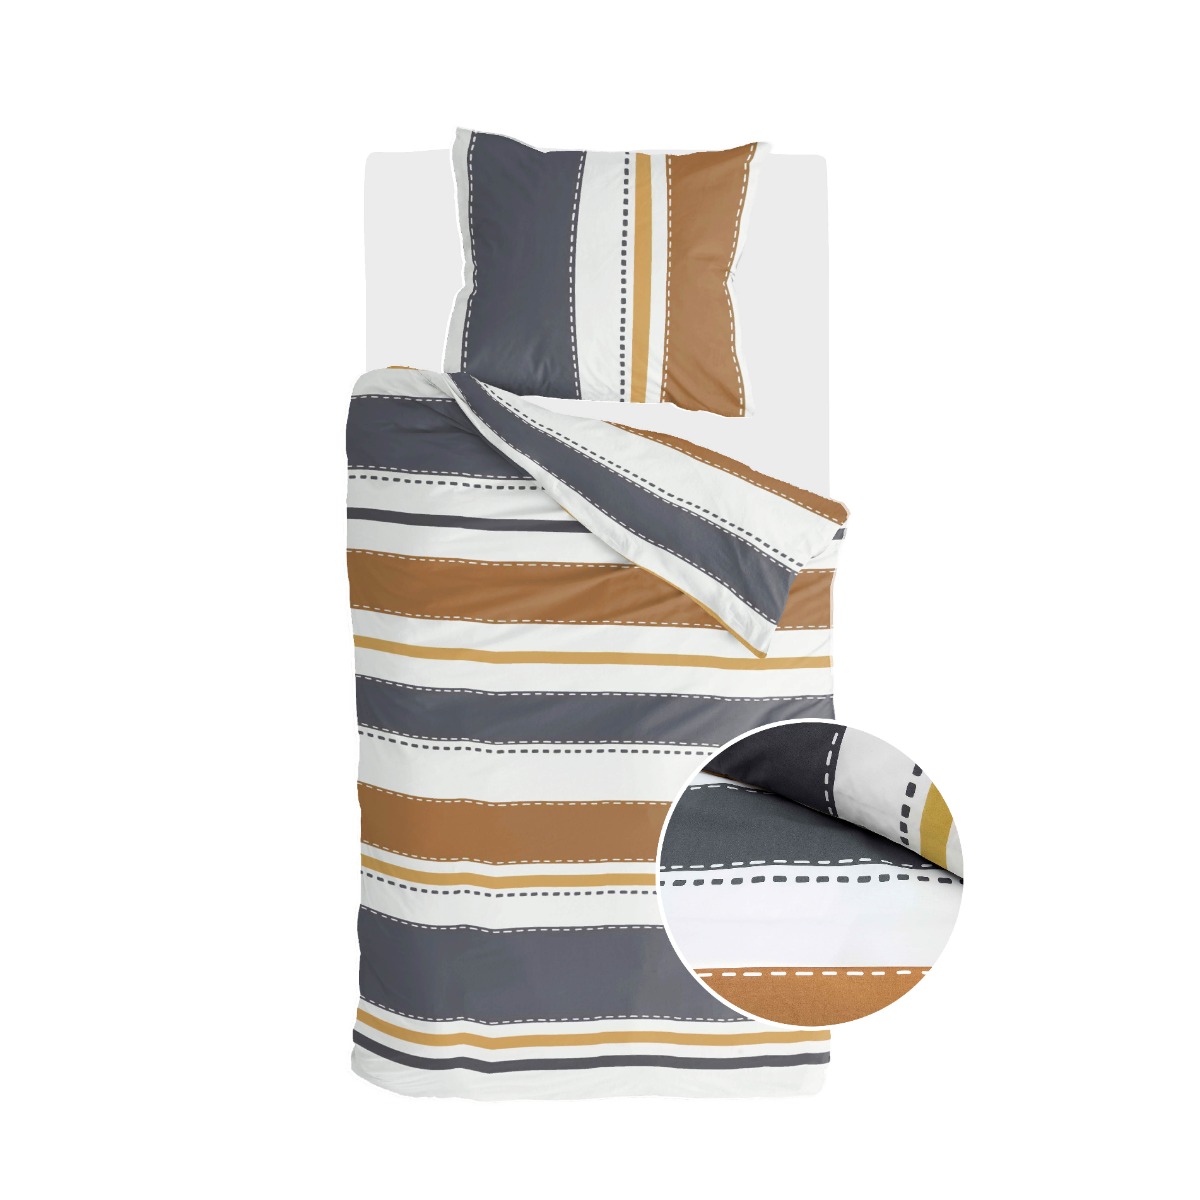 WALRA Dekbedovertrek Stripes & Stitches Antraciet - 155x220 cm